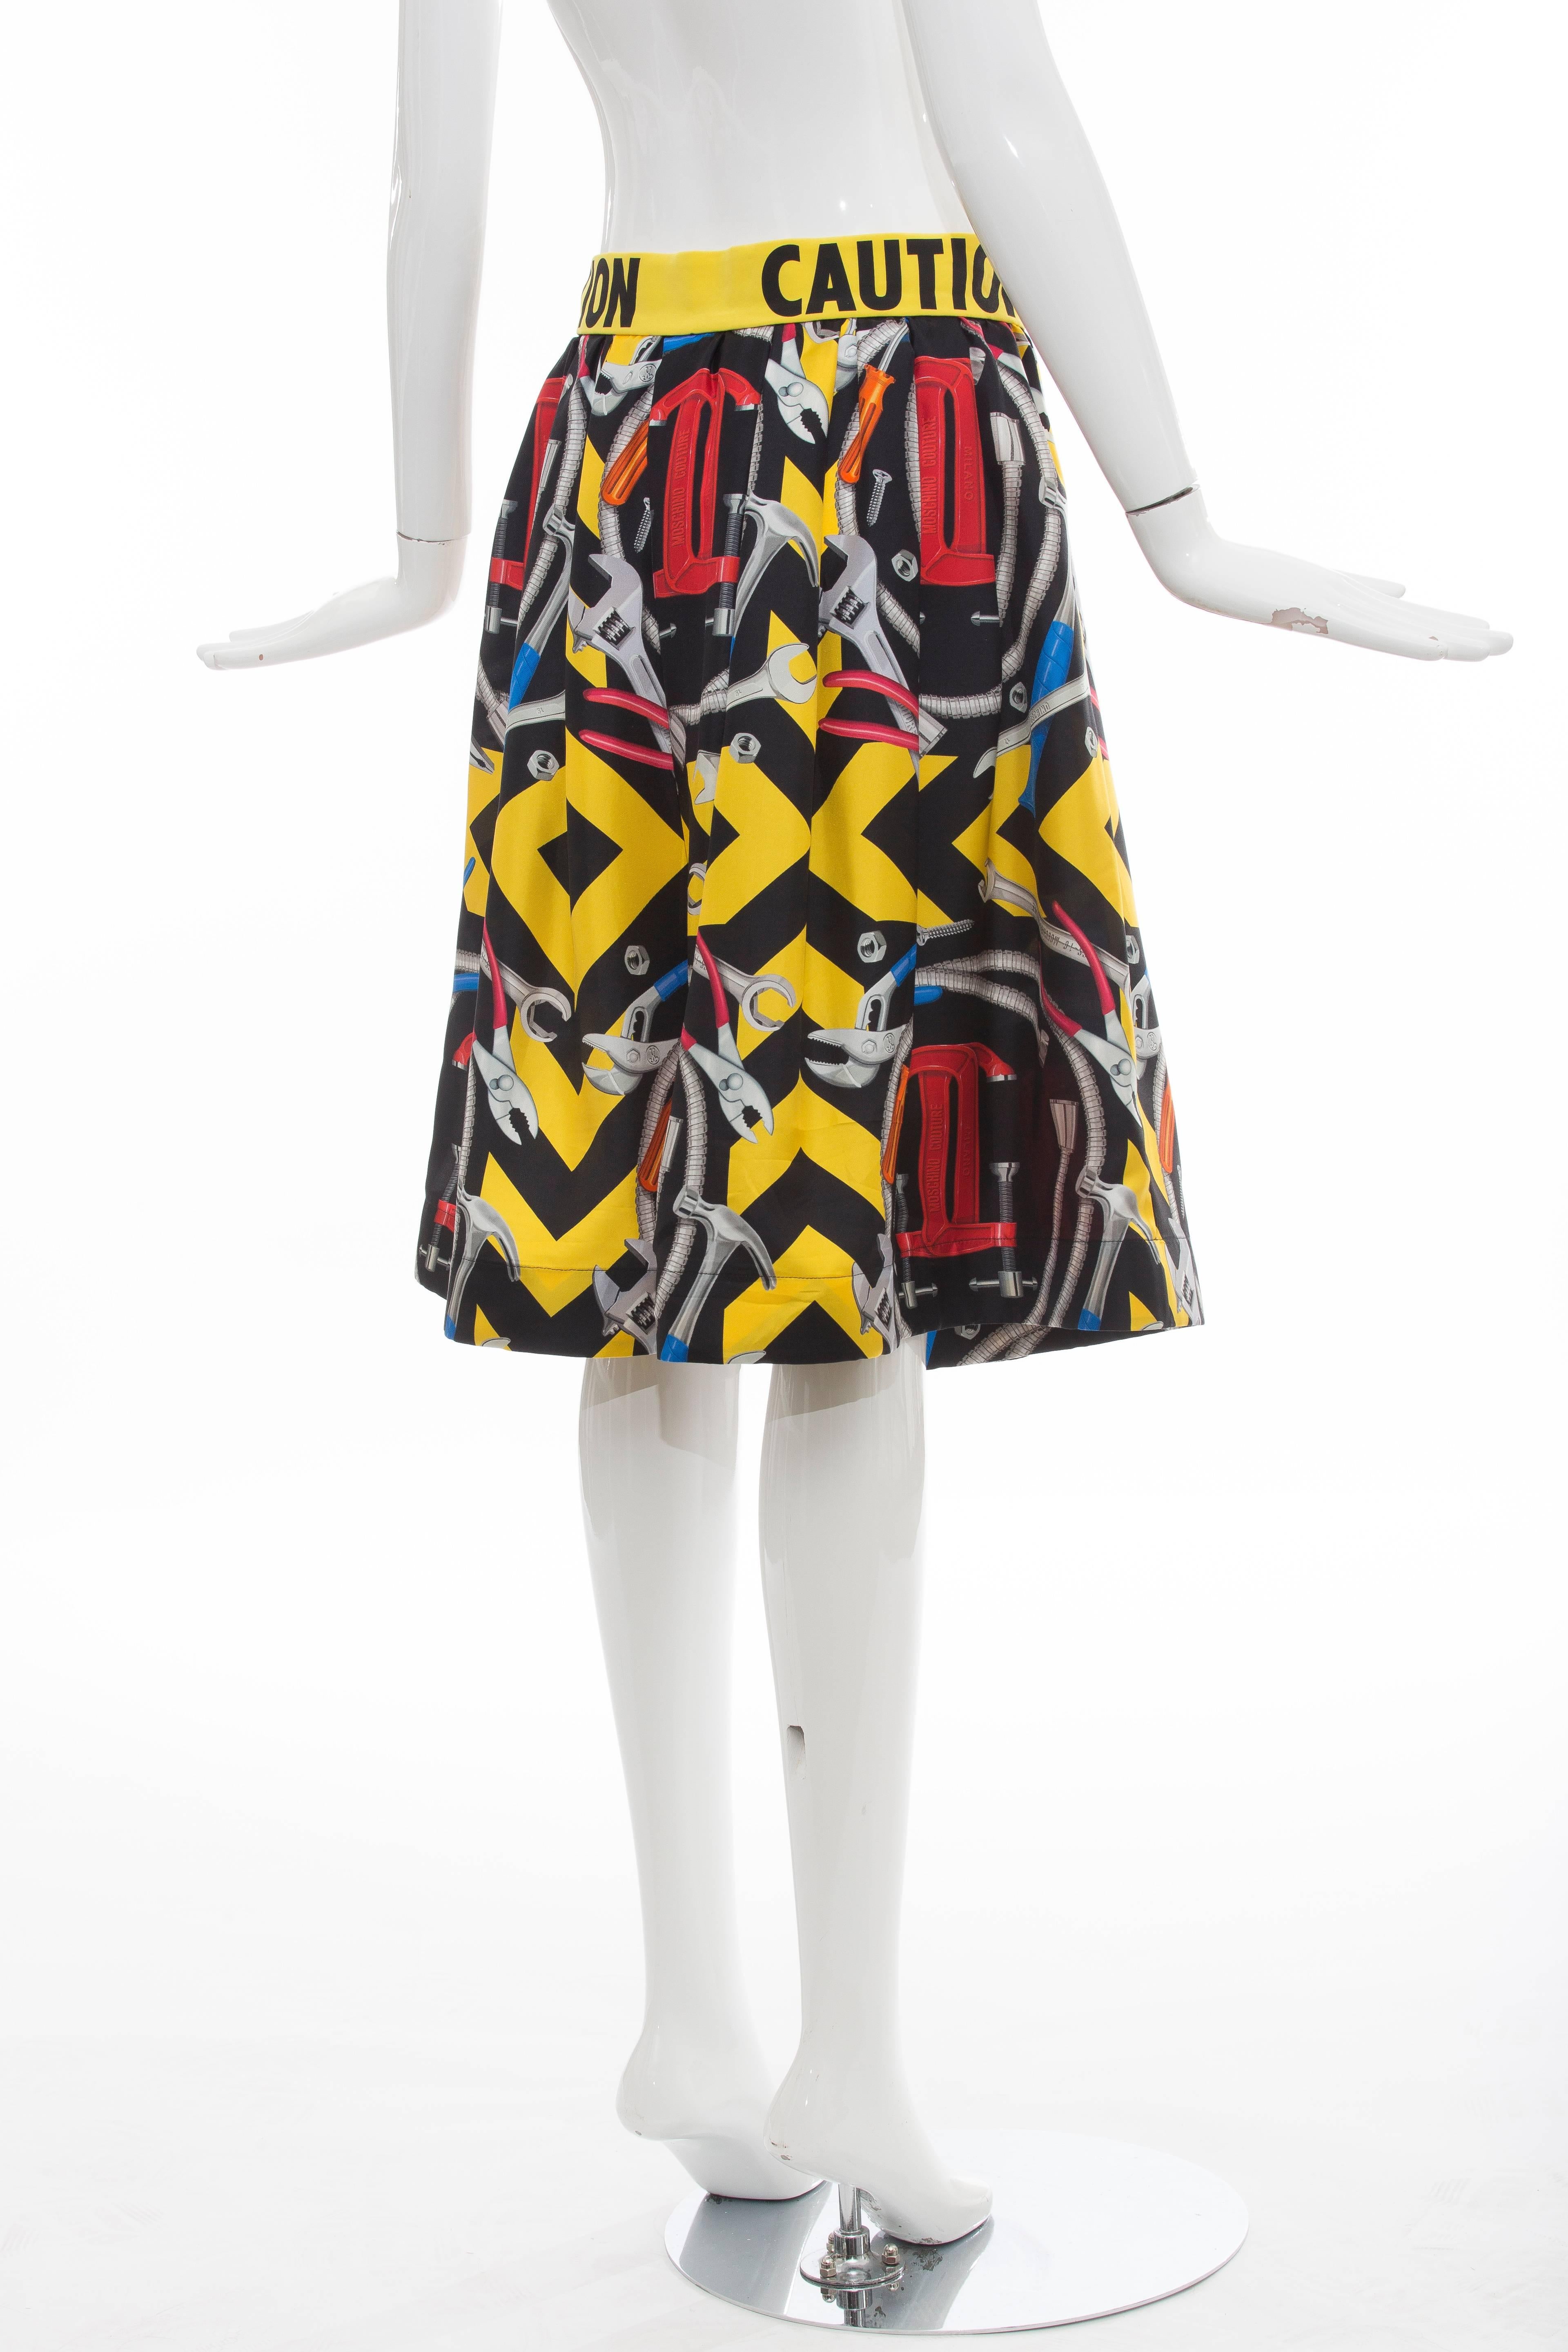 Women's Jeremy Scott For Moschino Couture Runway Silk Print Skirt, Spring 2016